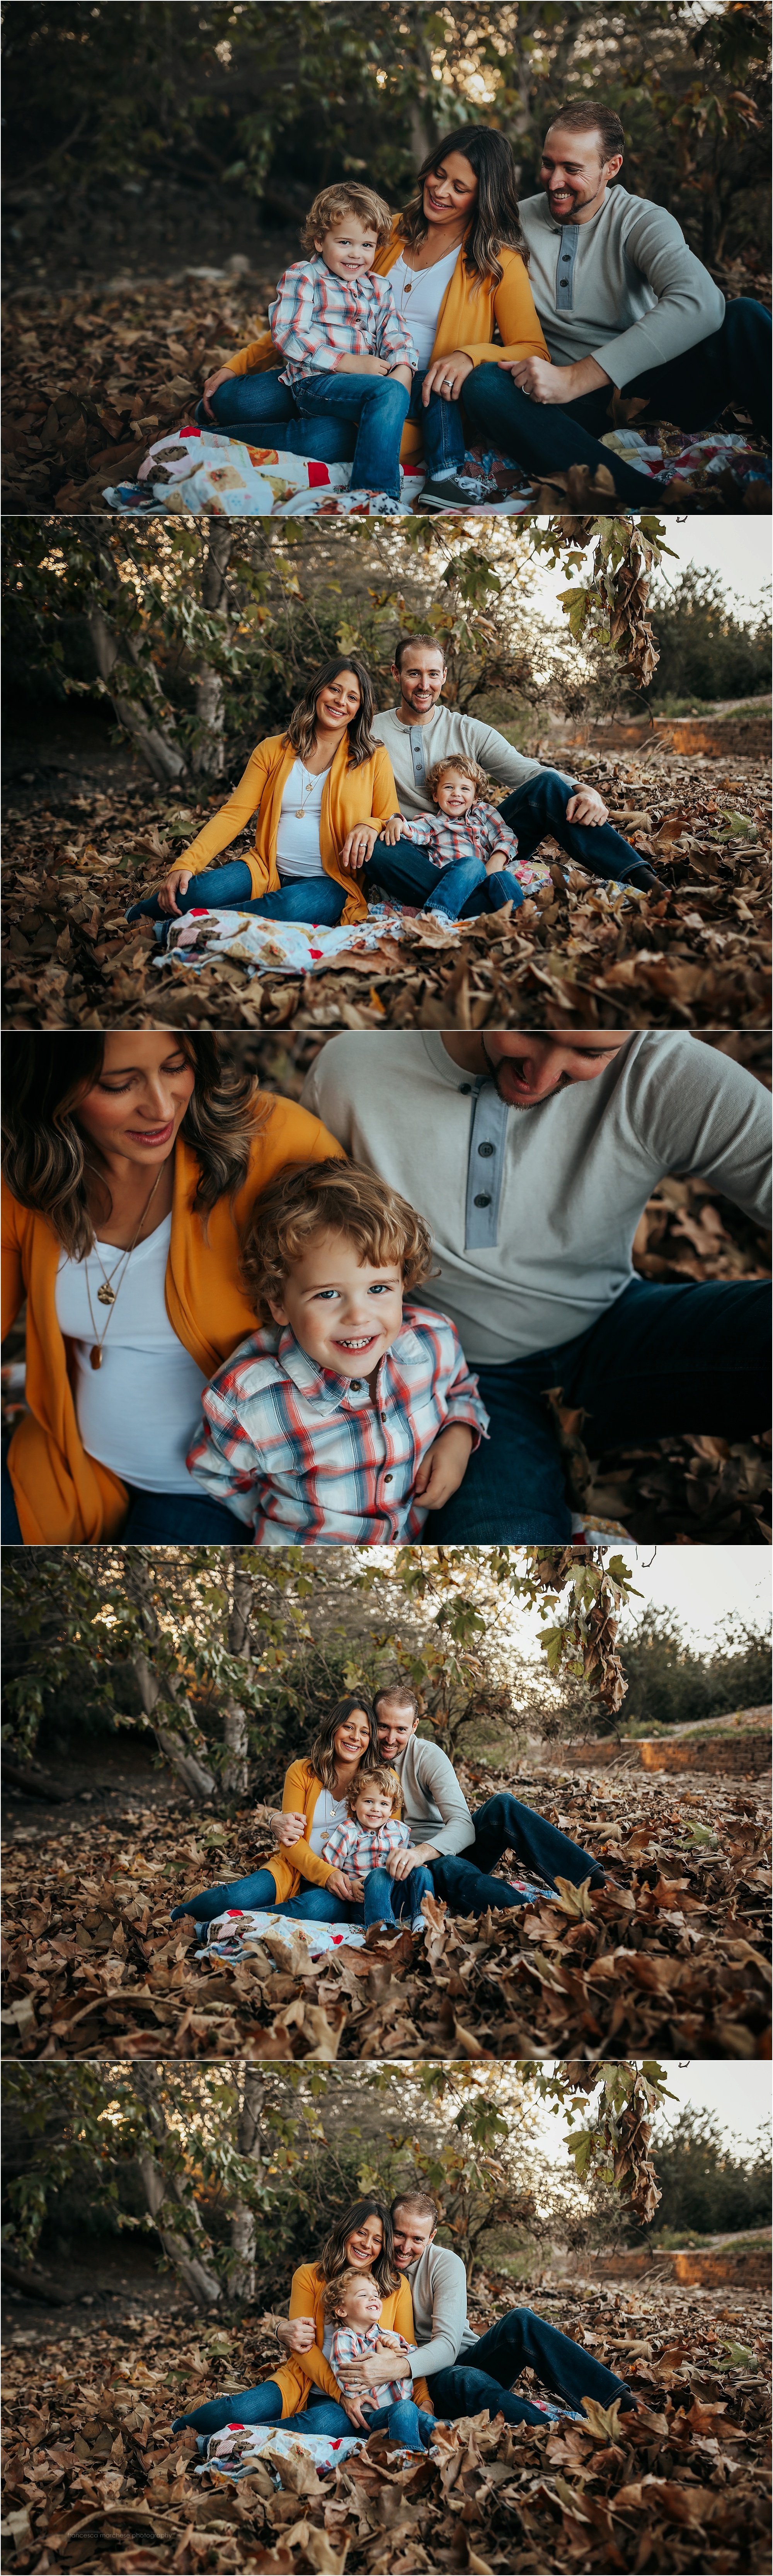 Orange County Family Maternity Photographer - Francesca Marchese Photography